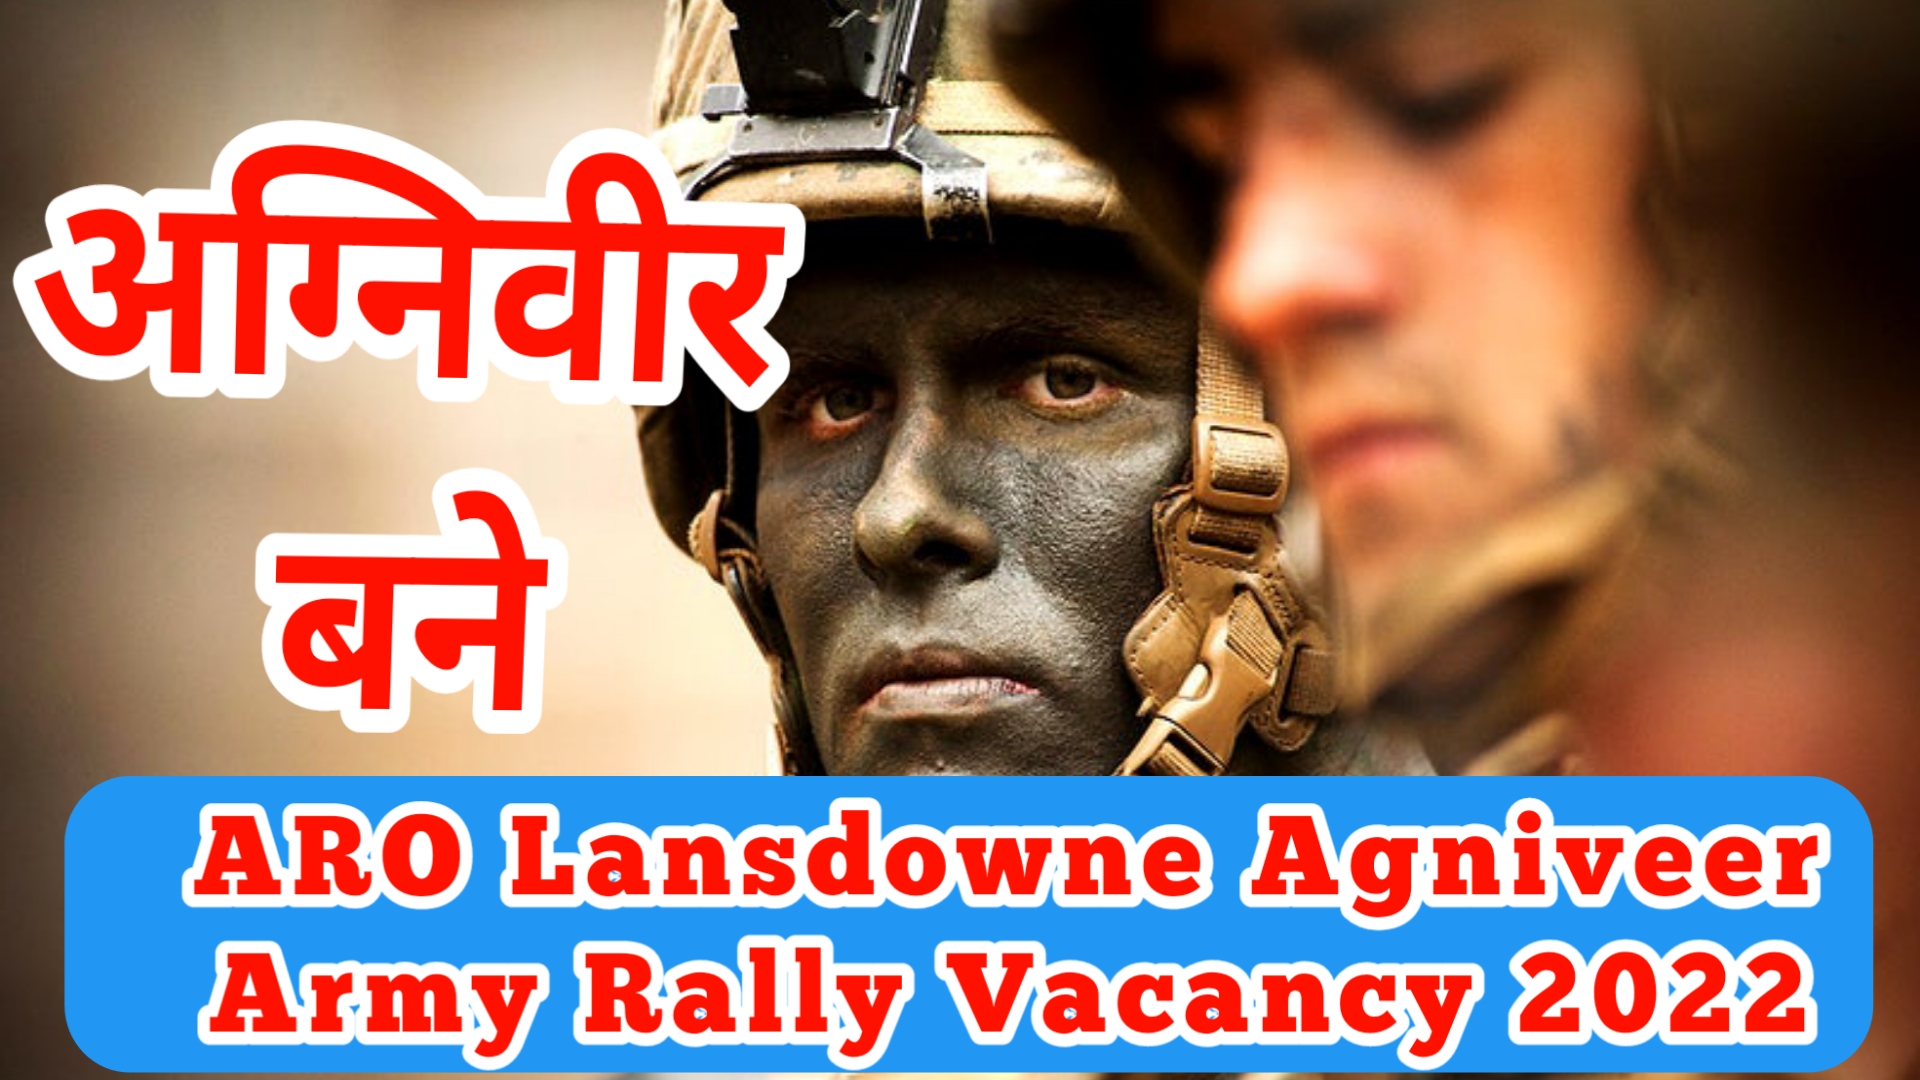 ARO Lansdowne Agniveer Army Rally Vacancy 2022